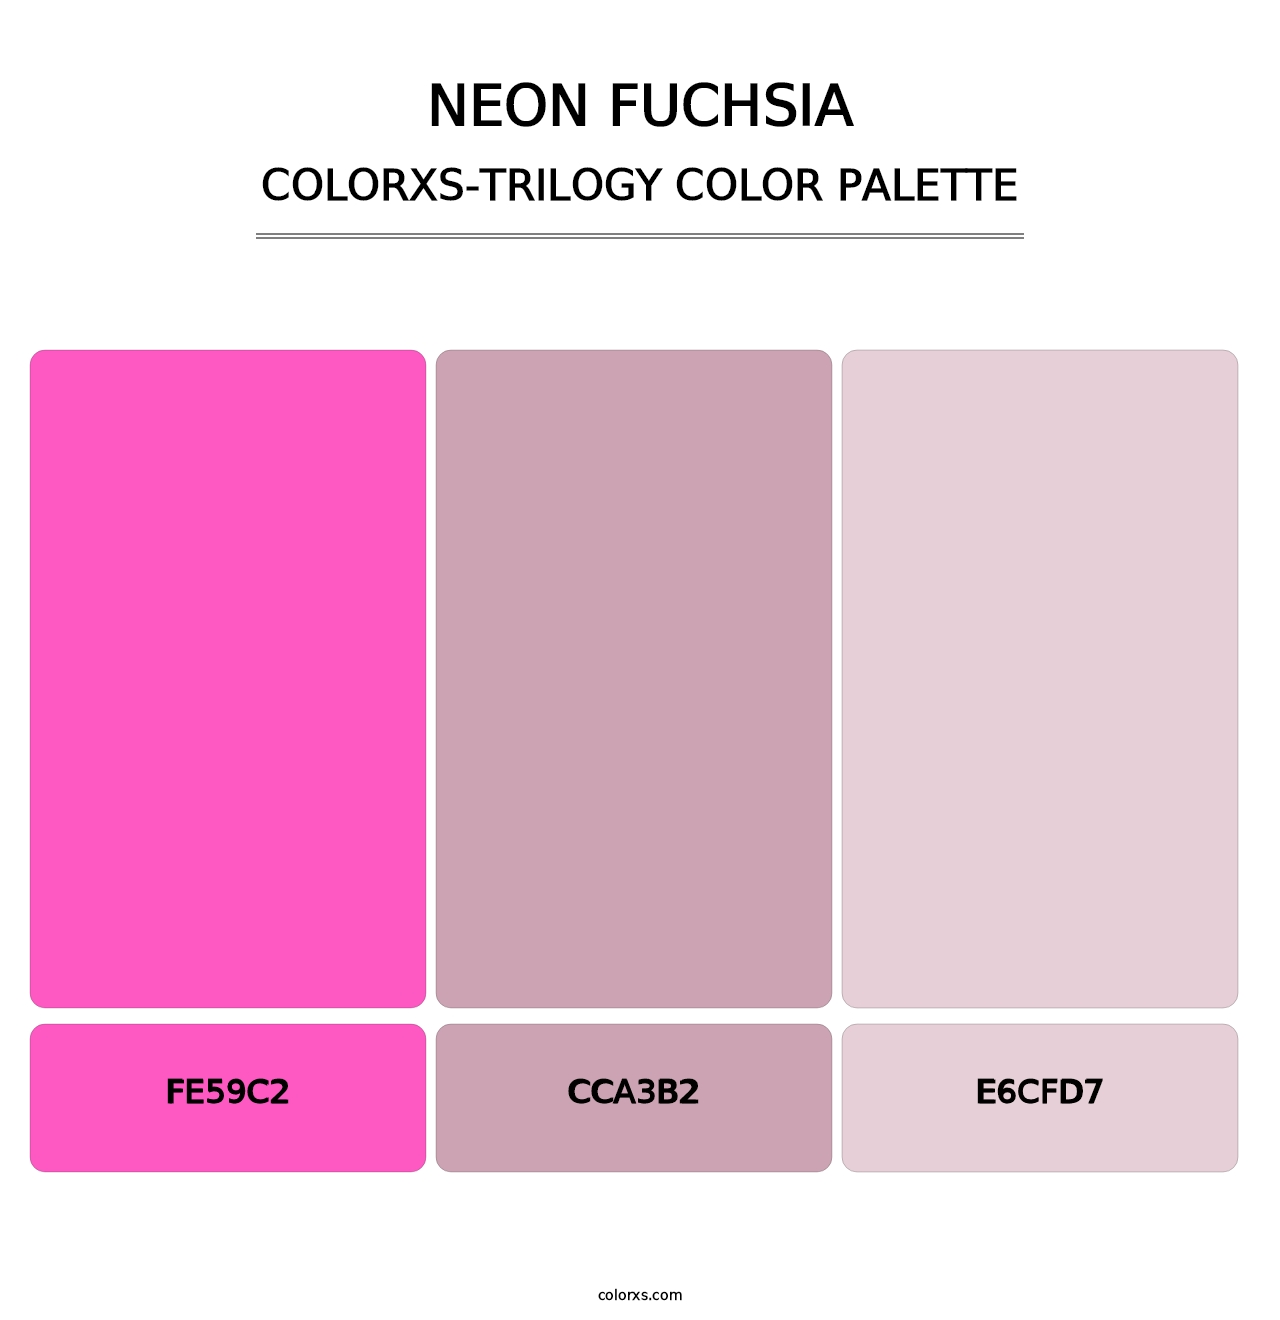 Neon Fuchsia - Colorxs Trilogy Palette